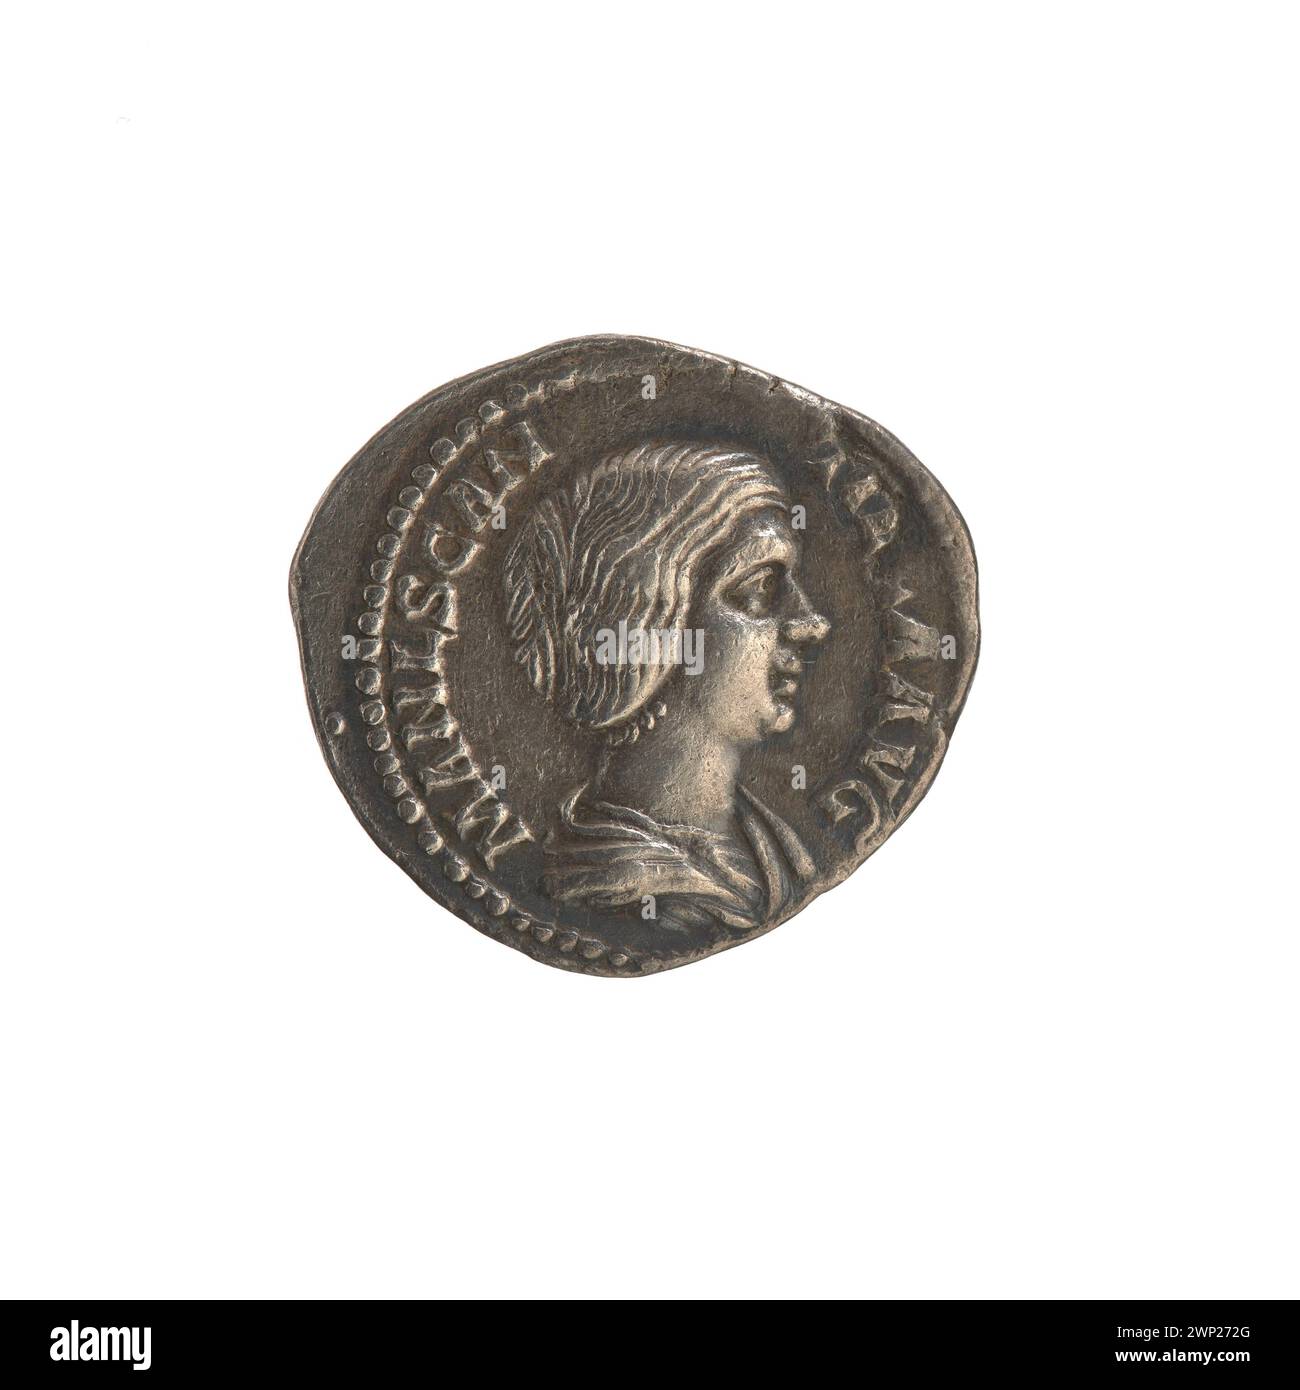 Denar (BECKERA FALSEF); Becker, Carl Wilhelm (contraffazione di monete; 1772-1830), Manlia Scantylla (FL. 193; imperatrice romana 28.3-1,6.193); 193 (per l'originale) (193-00-00-193-00-00-00-00); Foto Stock